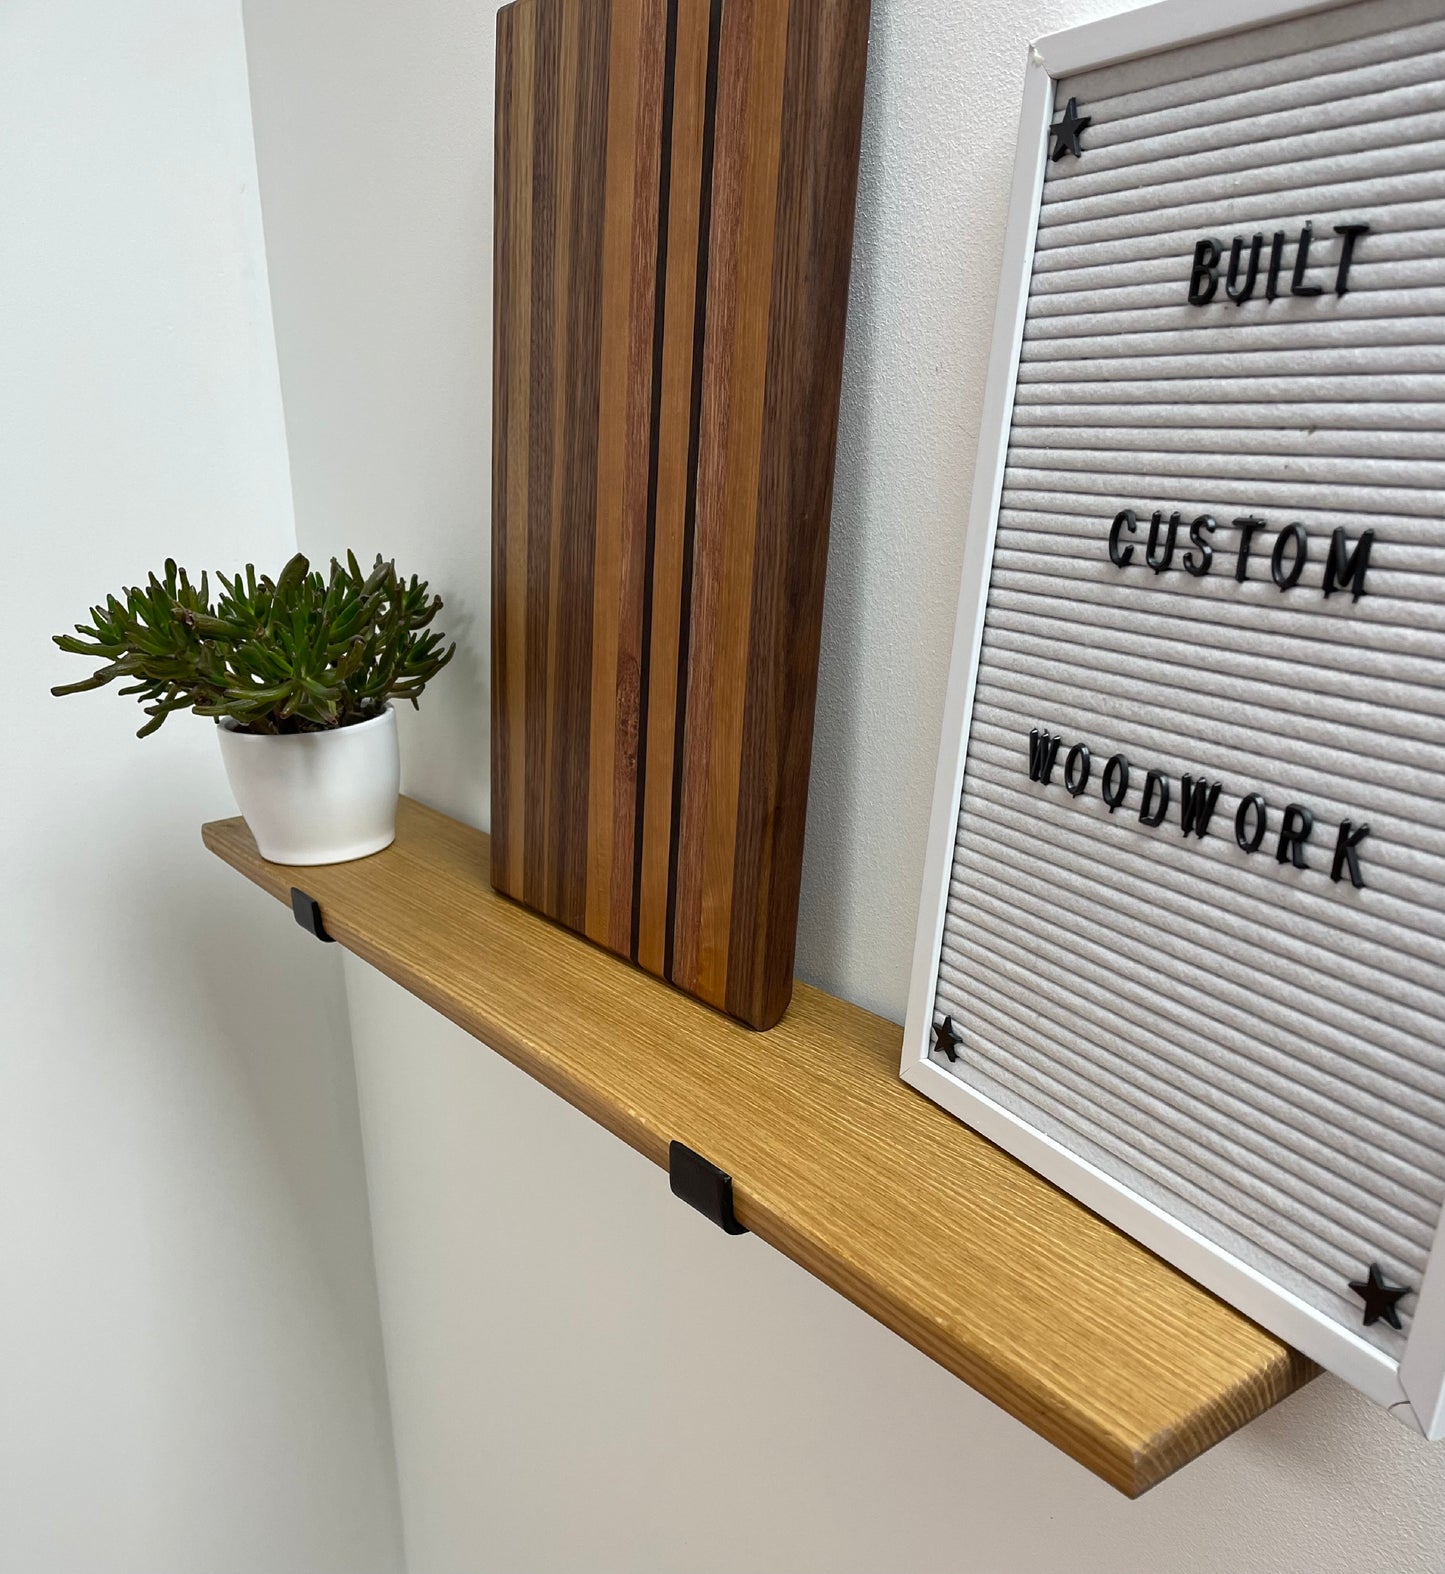 Premium European White Oak Industrial Style Shelf with Lipped Down Brackets, 20-25mm (1 Inch) Depth